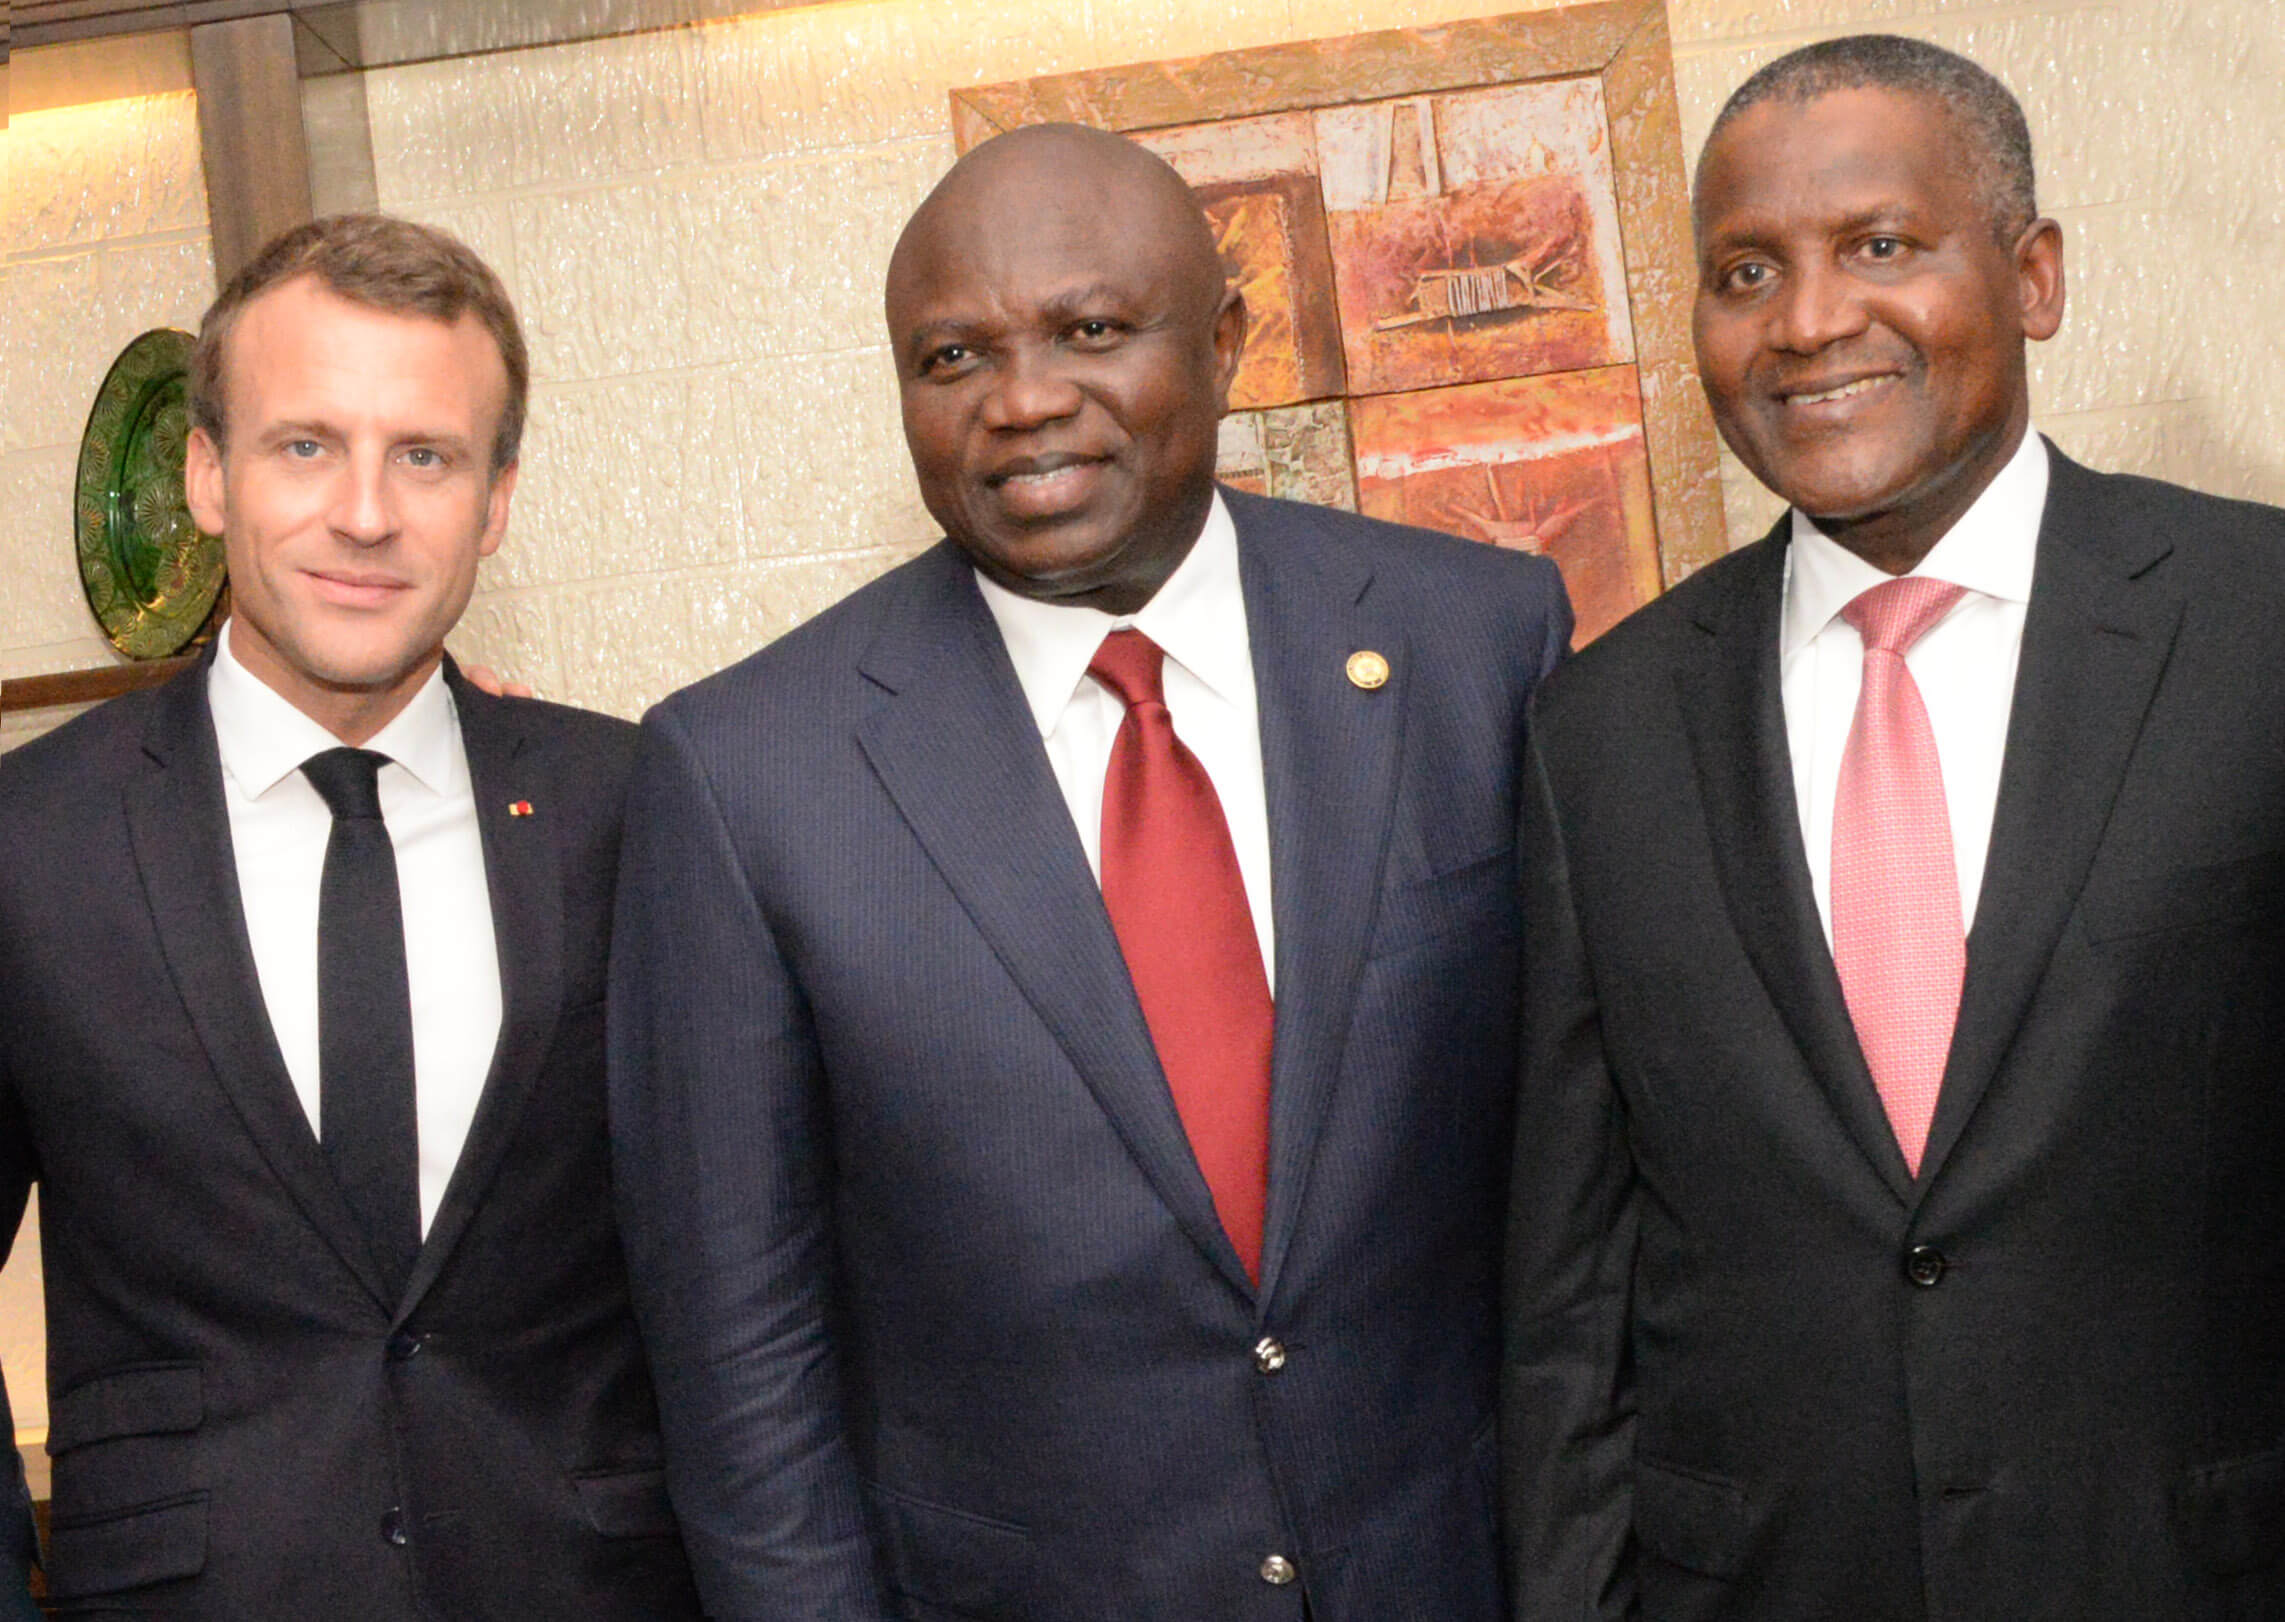 france president visit to nigeria